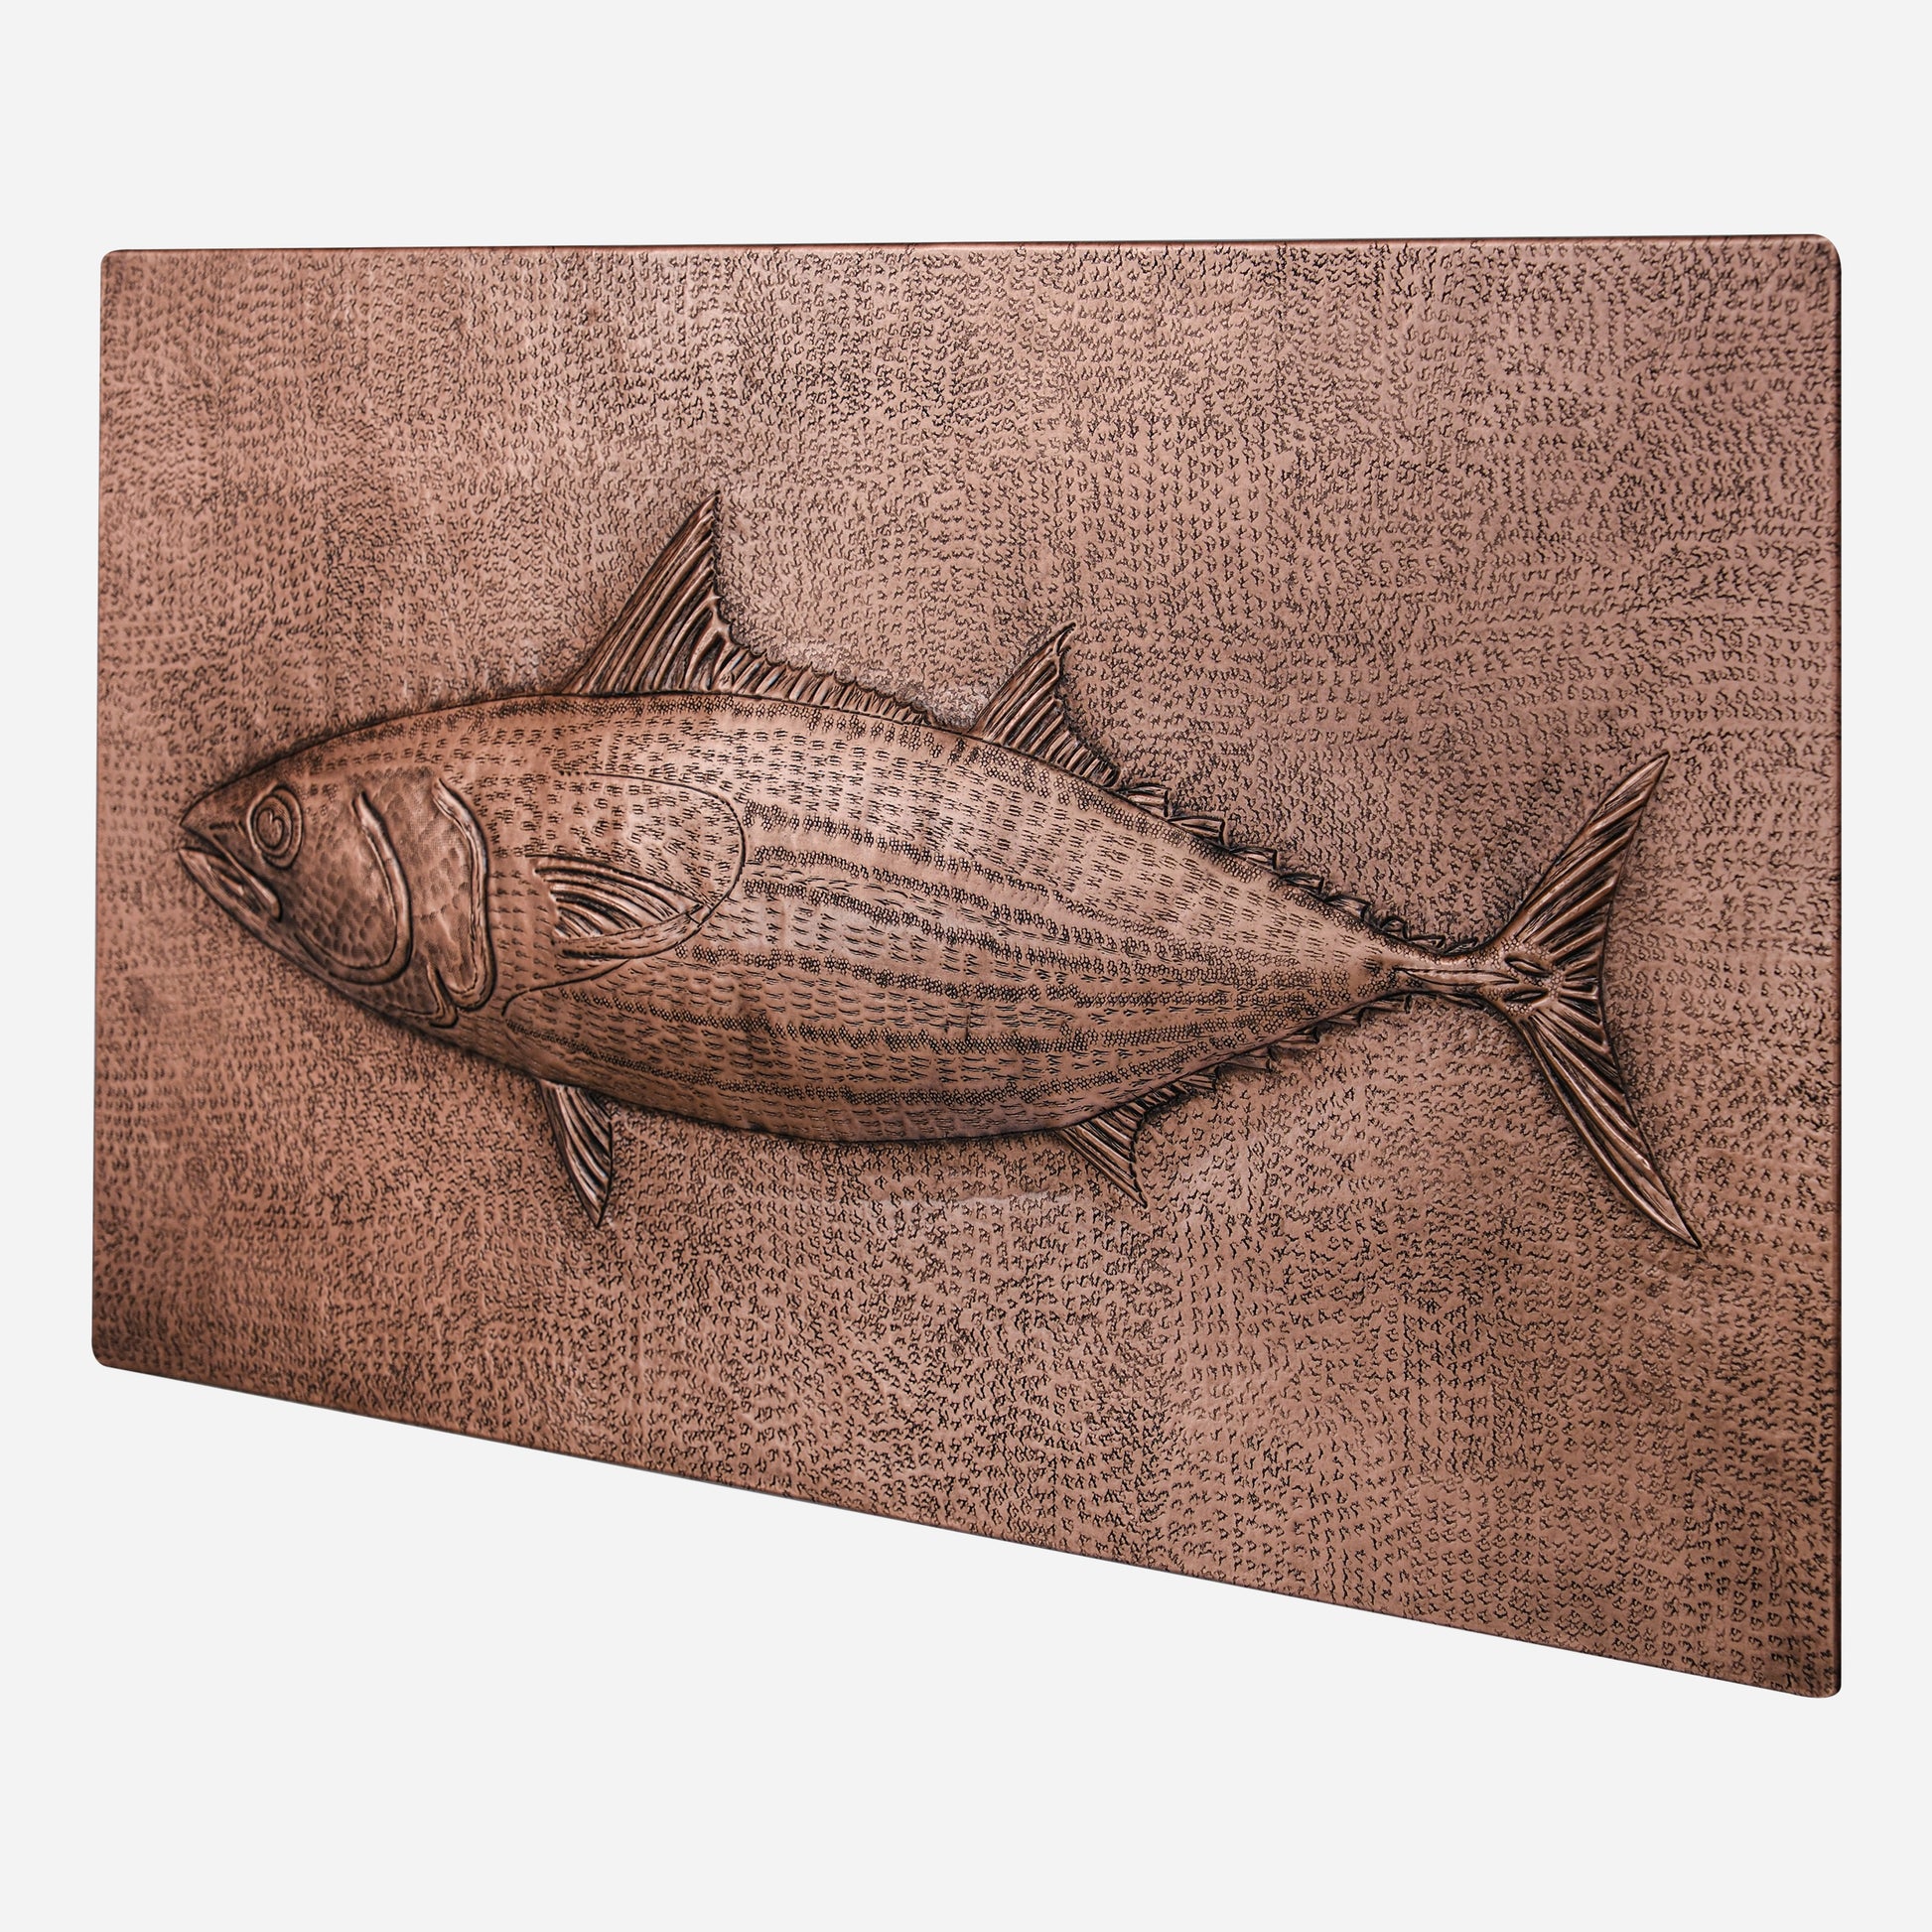 Copper Backsplash Panel (Skipjack Tuna Fish)